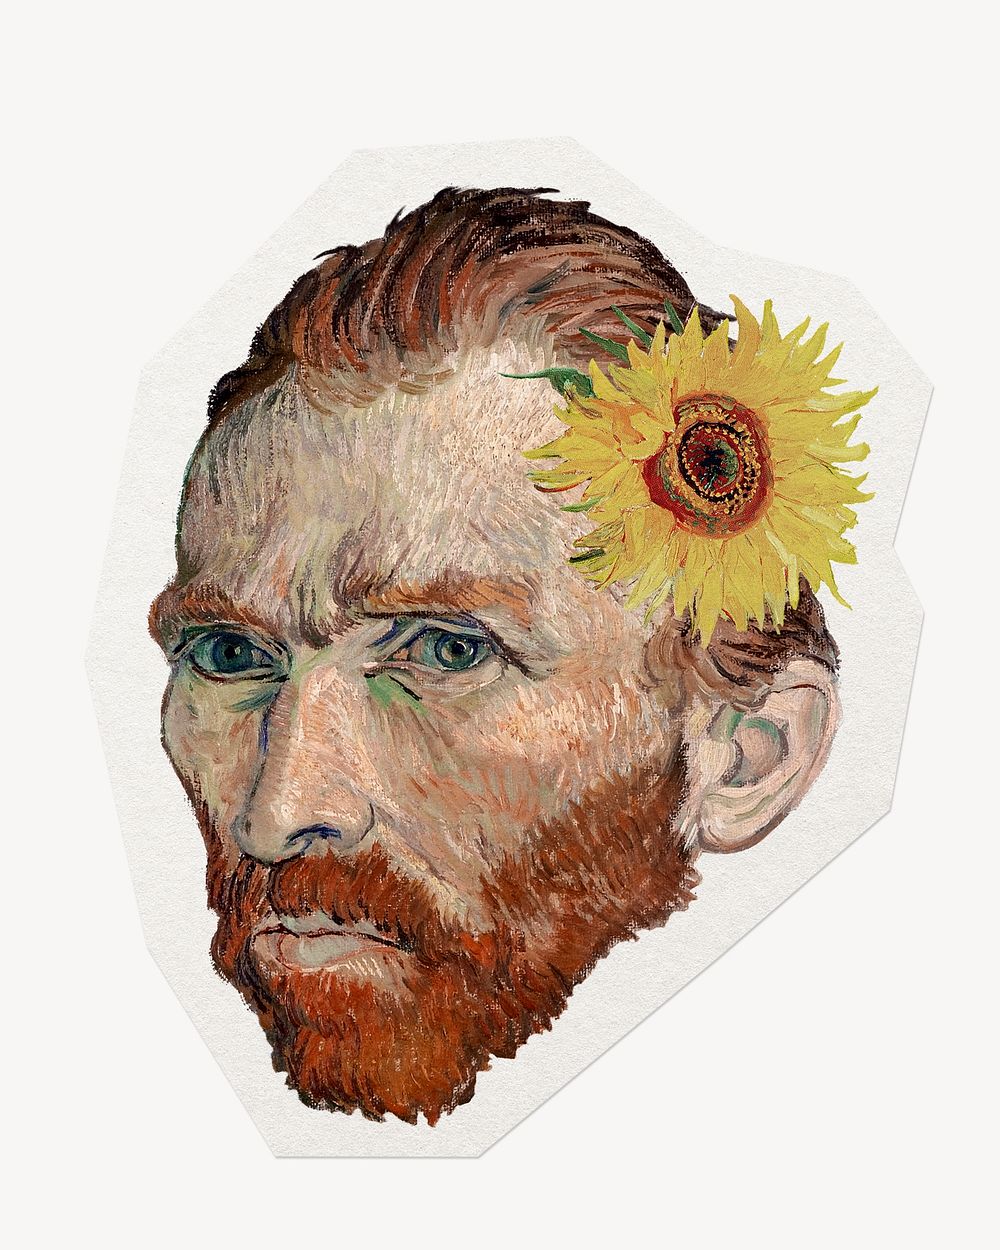 Van Gogh self portrait floral collage element, remix by rawpixel